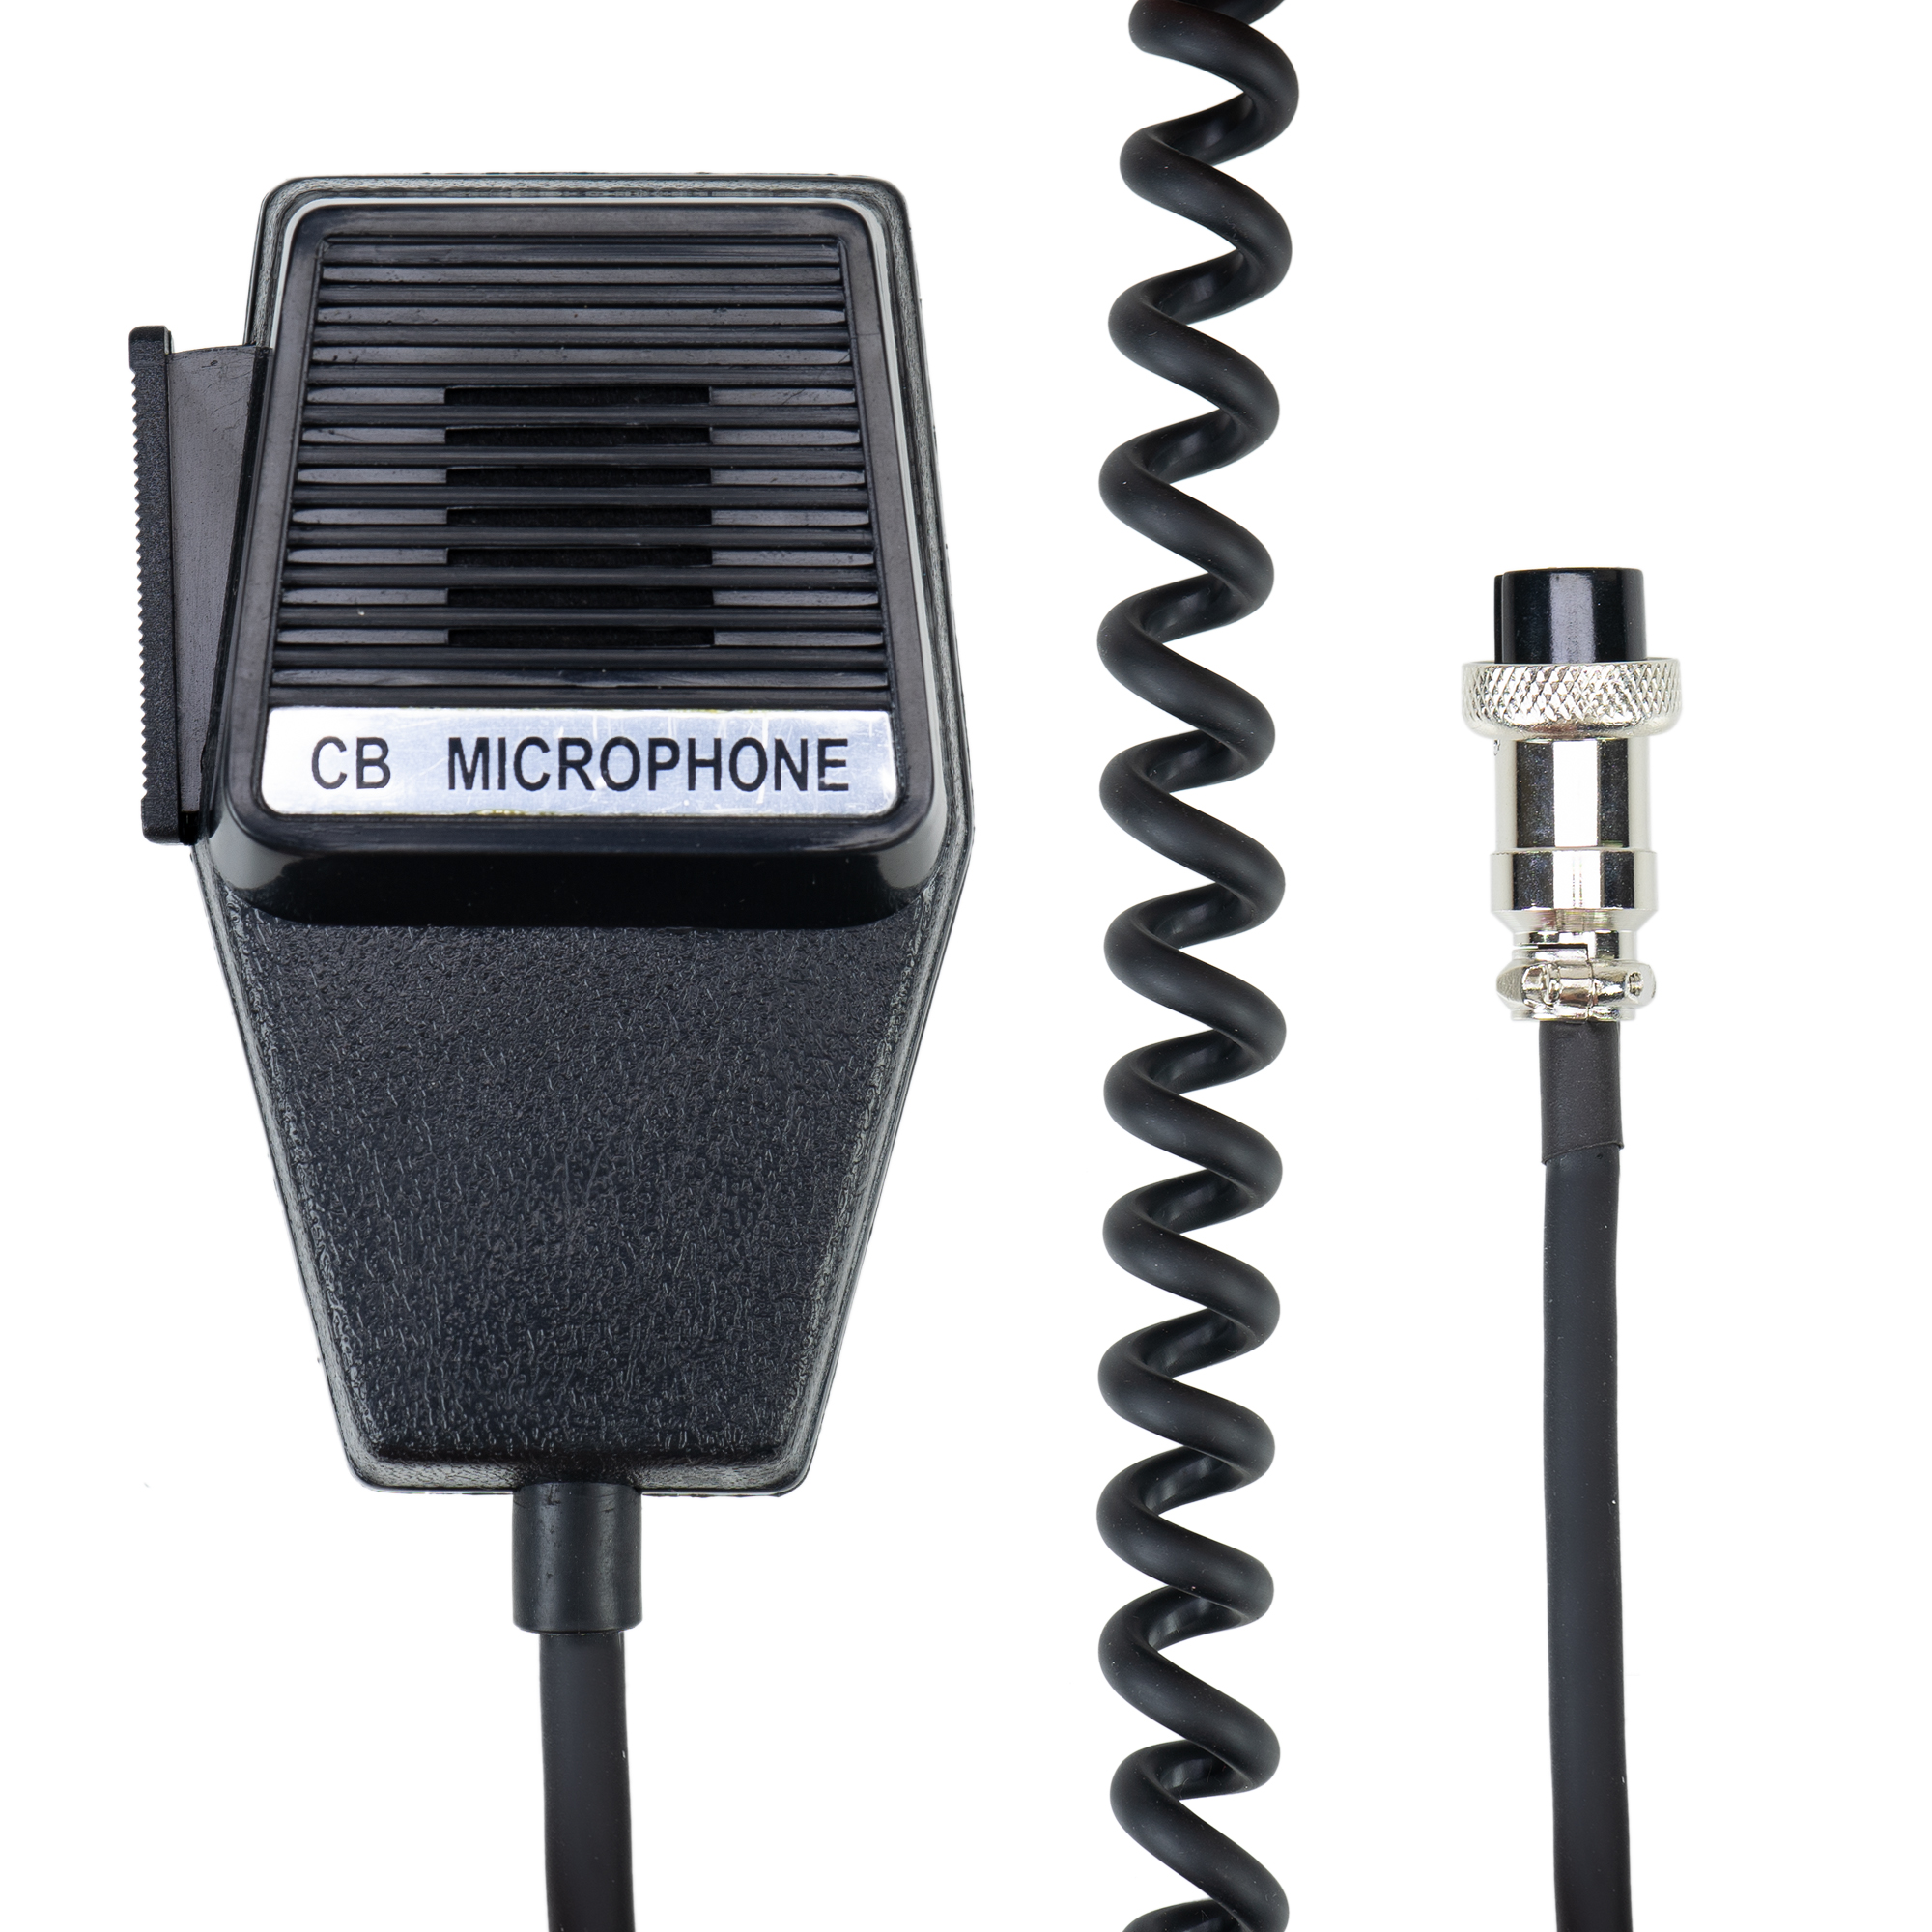 Microfon PNI DIN26 pentru statie radio CB, 6 pini